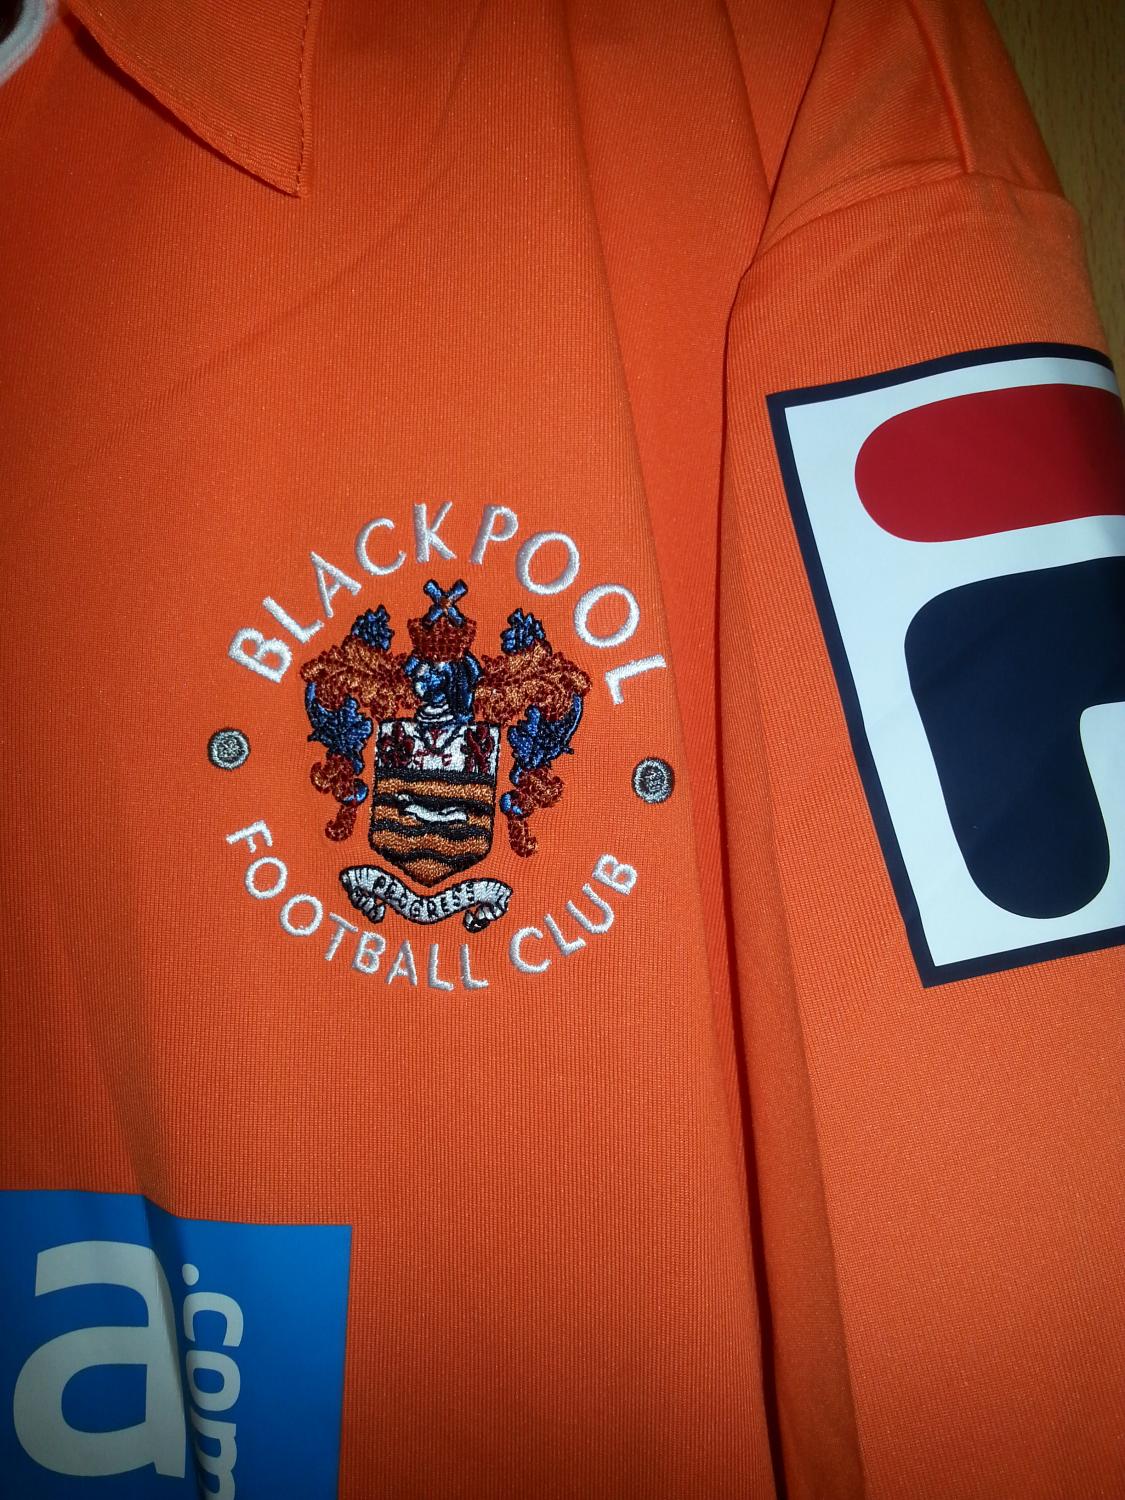 Blackpool Home football shirt 2011 - 2013. Sponsored by Wonga